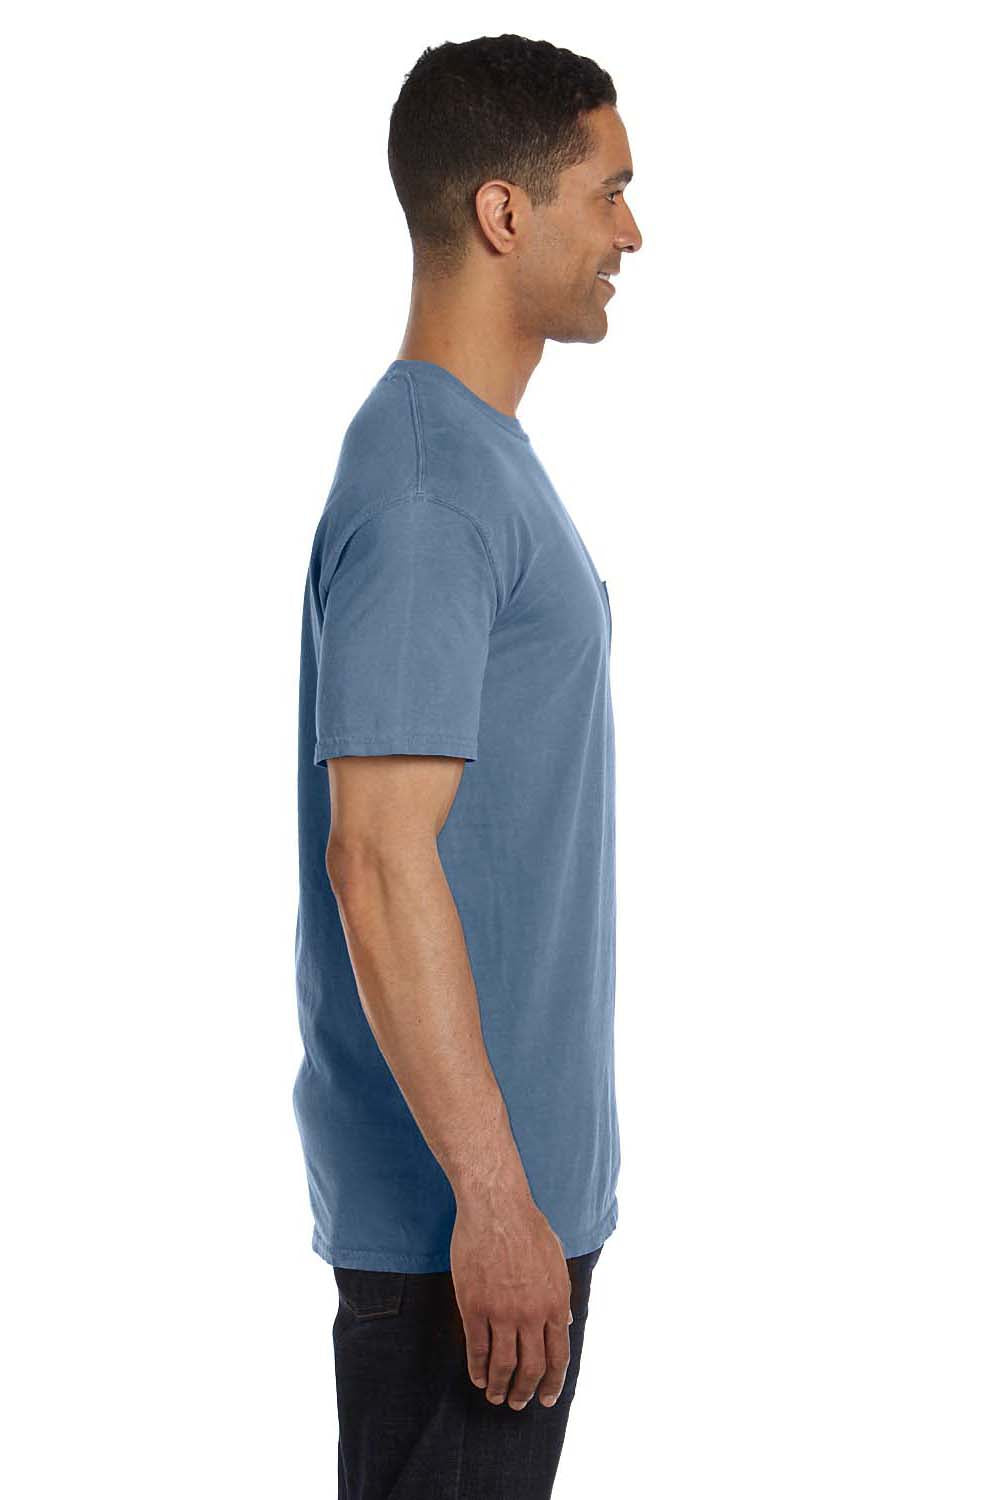 Comfort Colors 6030CC Mens Short Sleeve Crewneck T-Shirt w/ Pocket Blue Jean Side